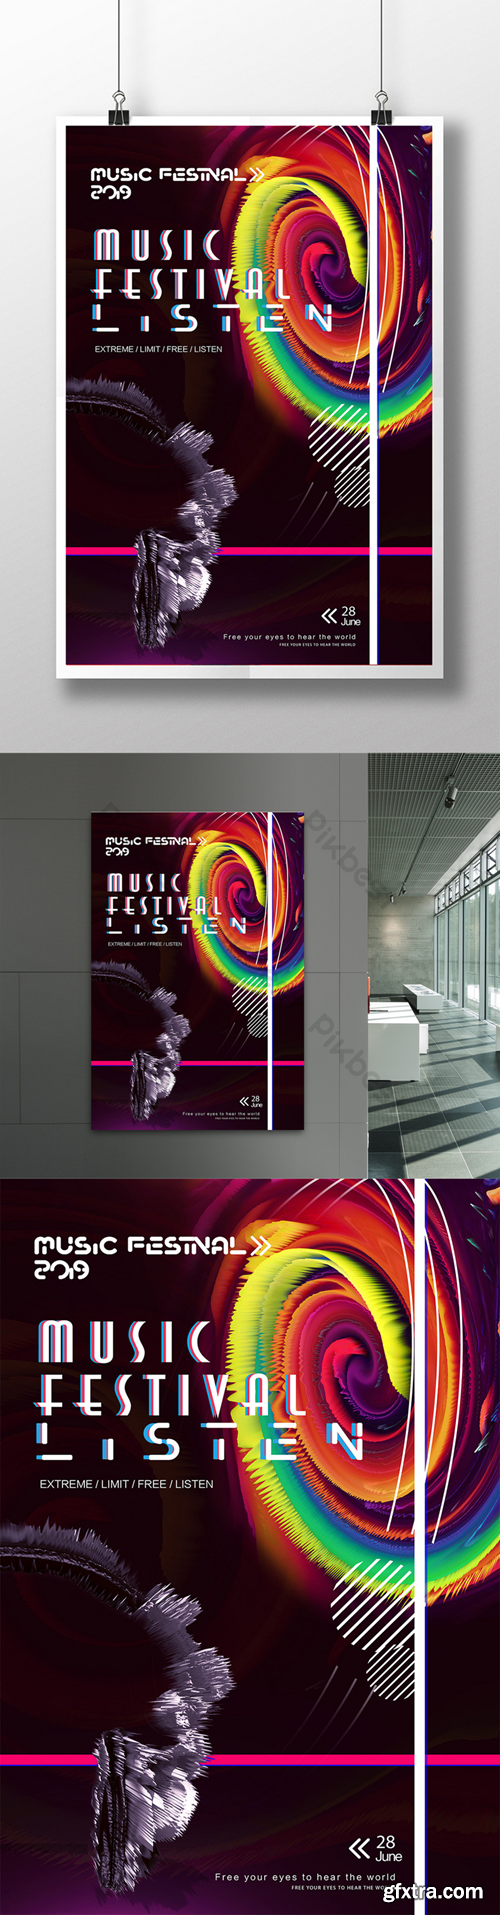 Fashion dynamic abstract audiovisual art advertising media music festival creative design Template PSD